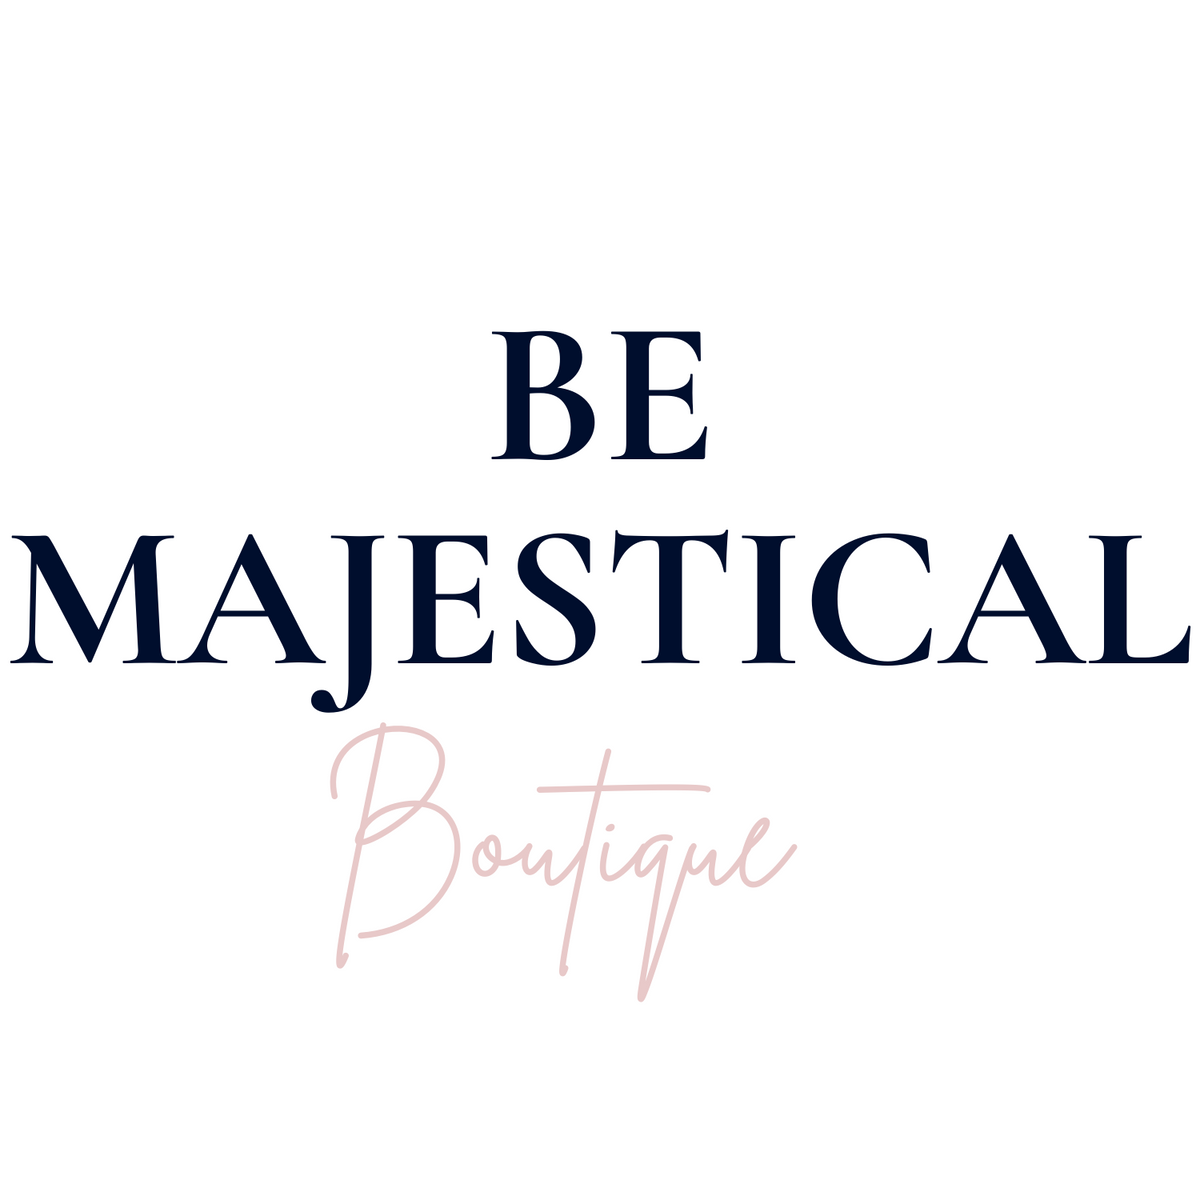 Be Majestical Boutique